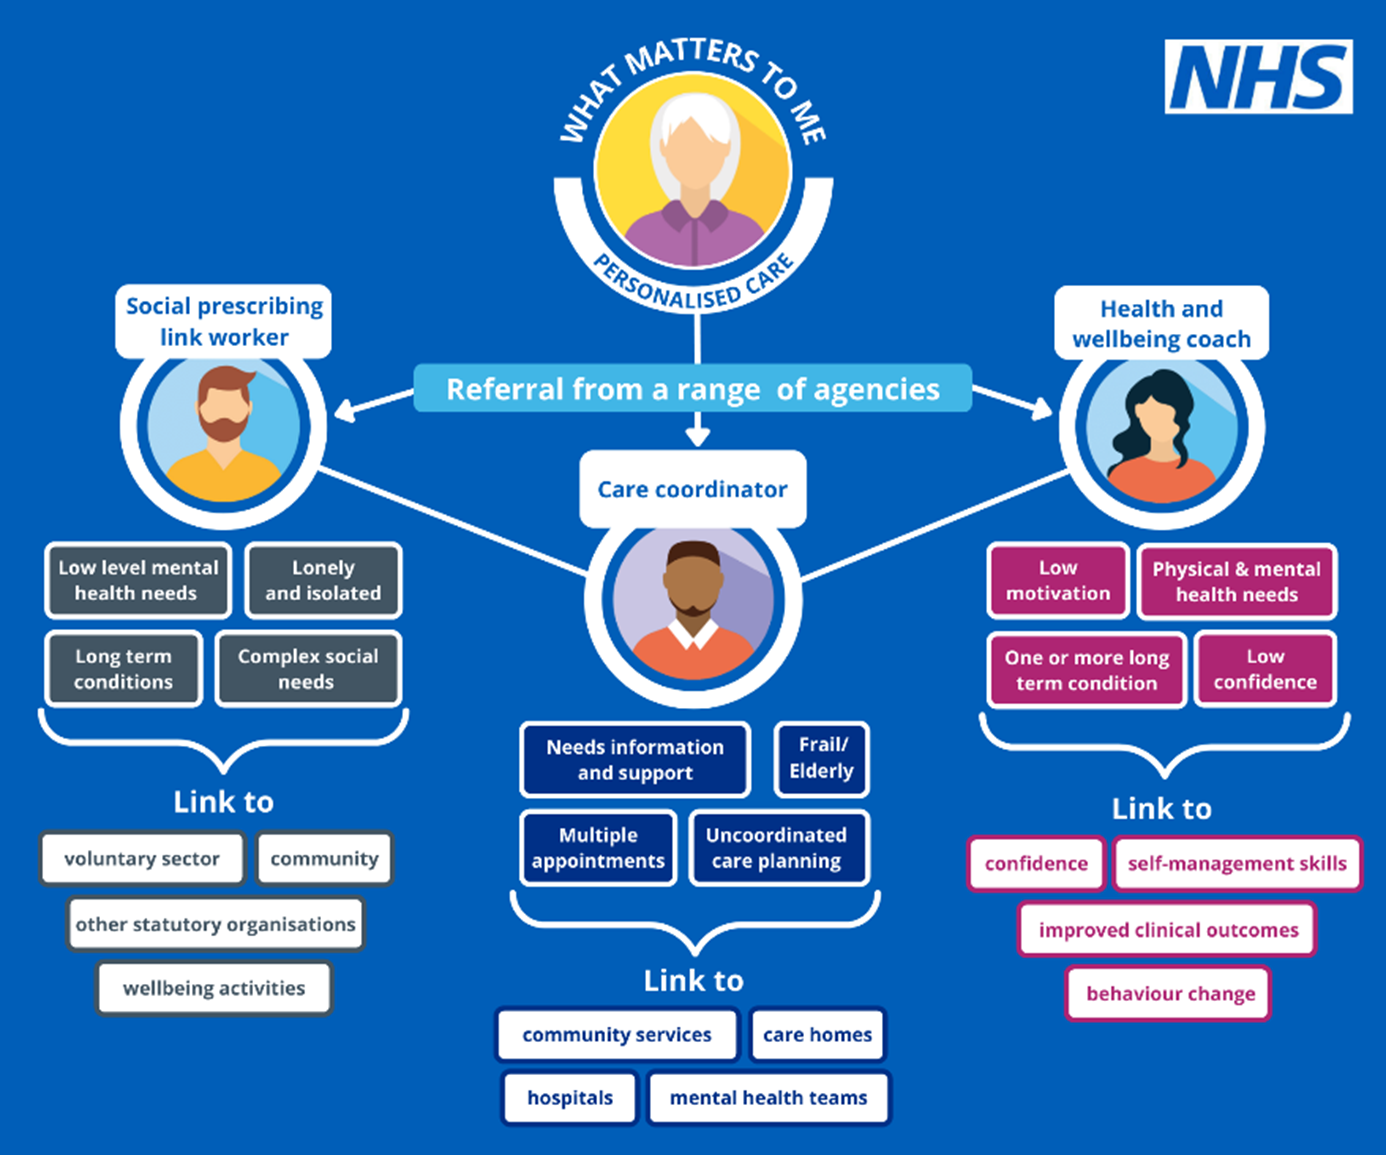 Nhs England Workforce Development Framework For Health And Wellbeing 